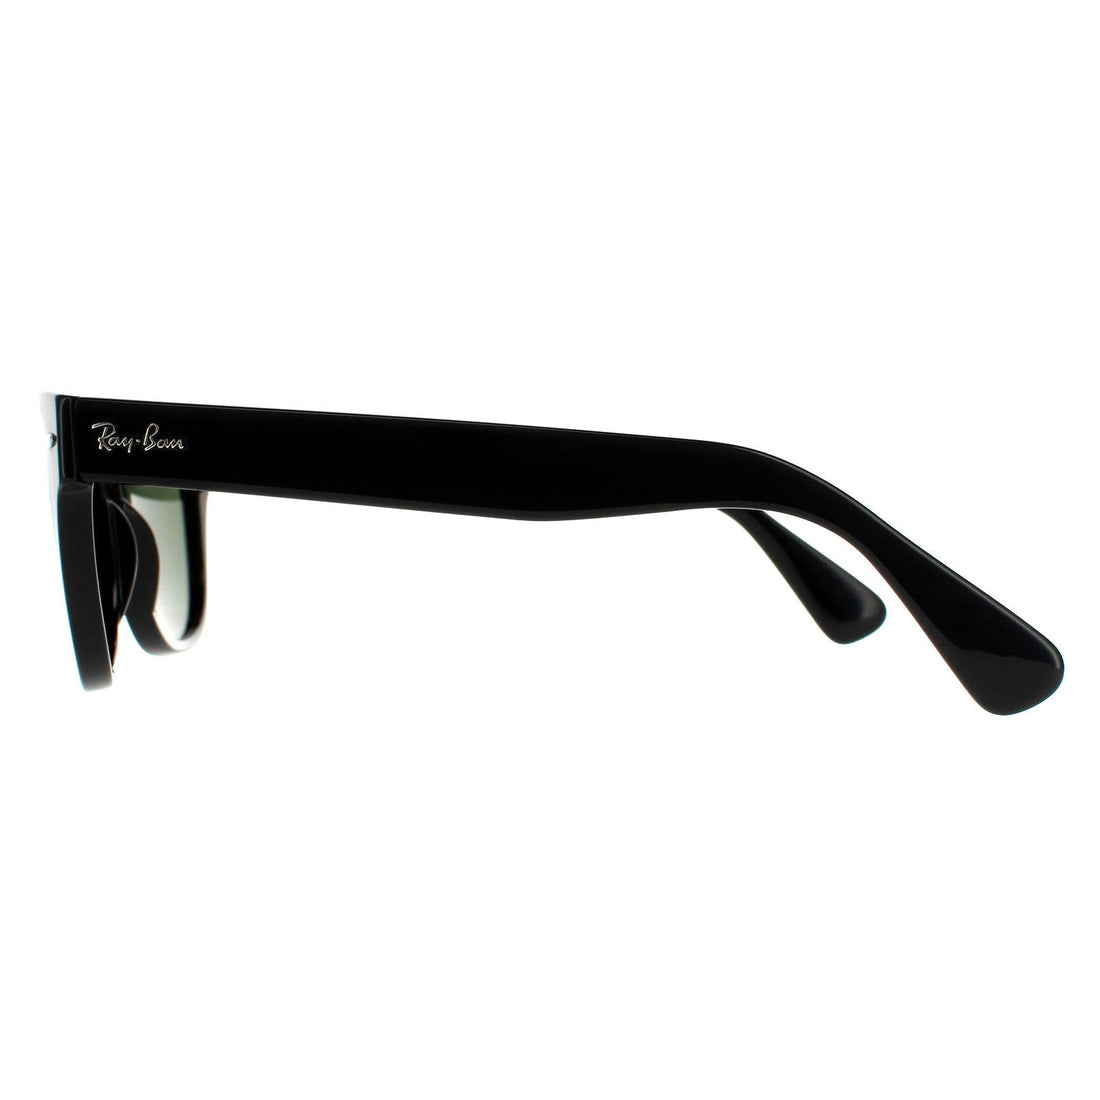 Ray-Ban Sunglasses Laramie RB2201 901/31 Black Green 54mm